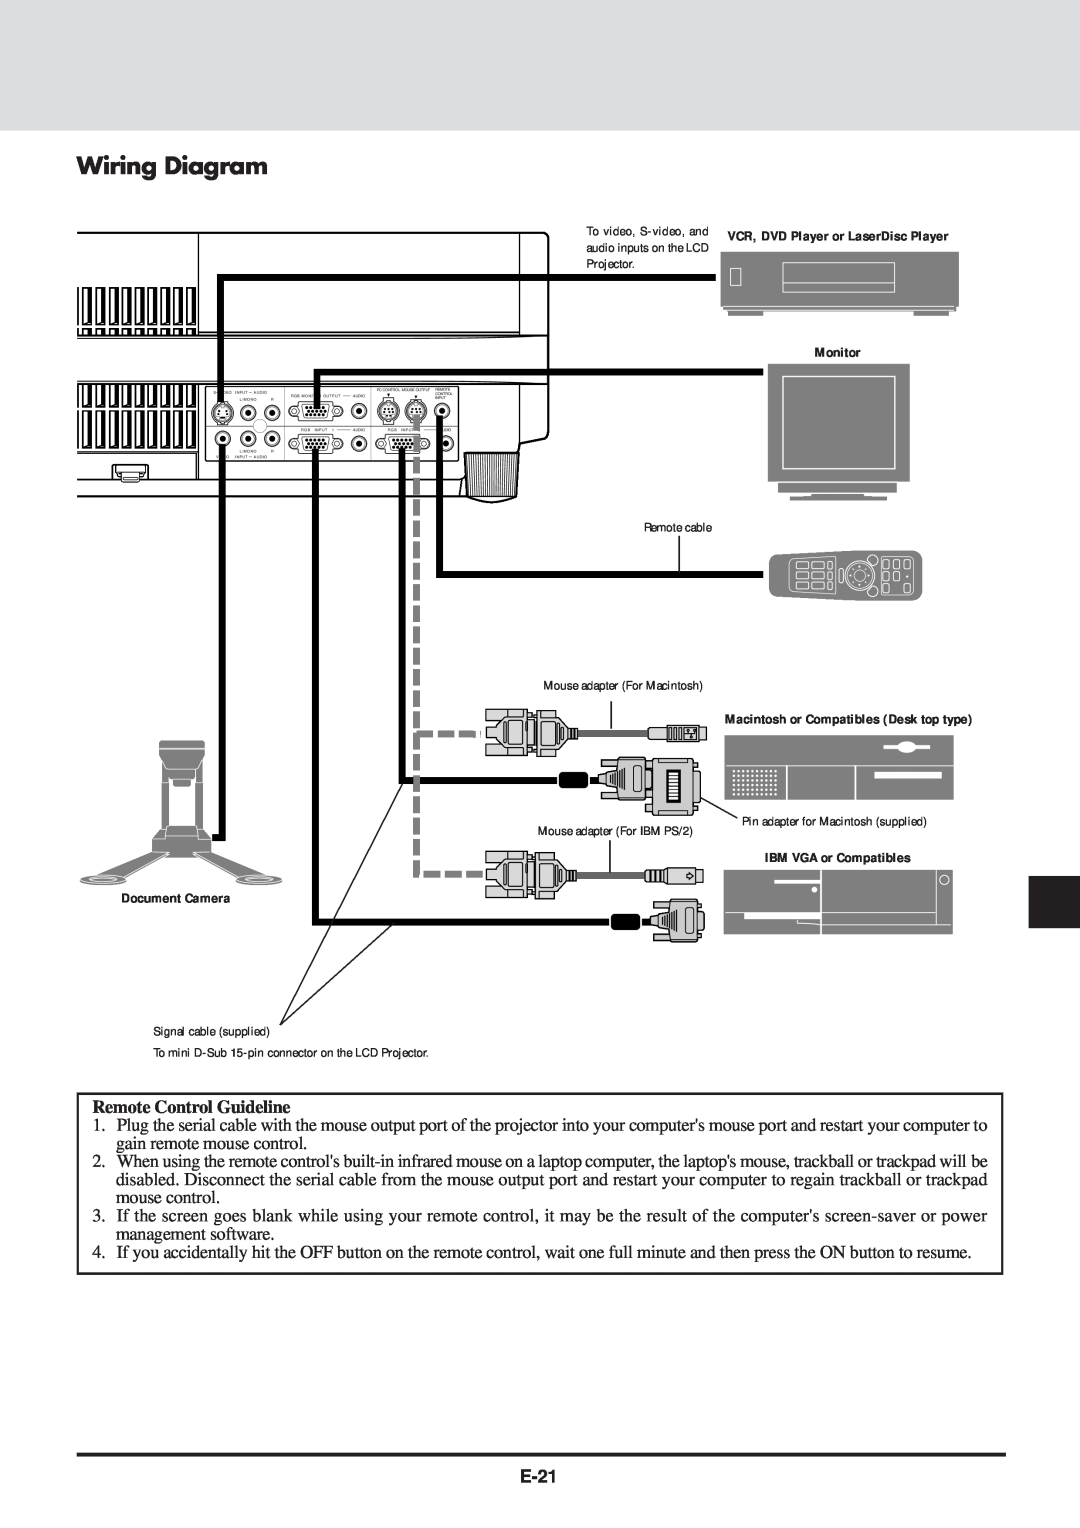 NEC MT830 user manual Wiring Diagram, E-21 